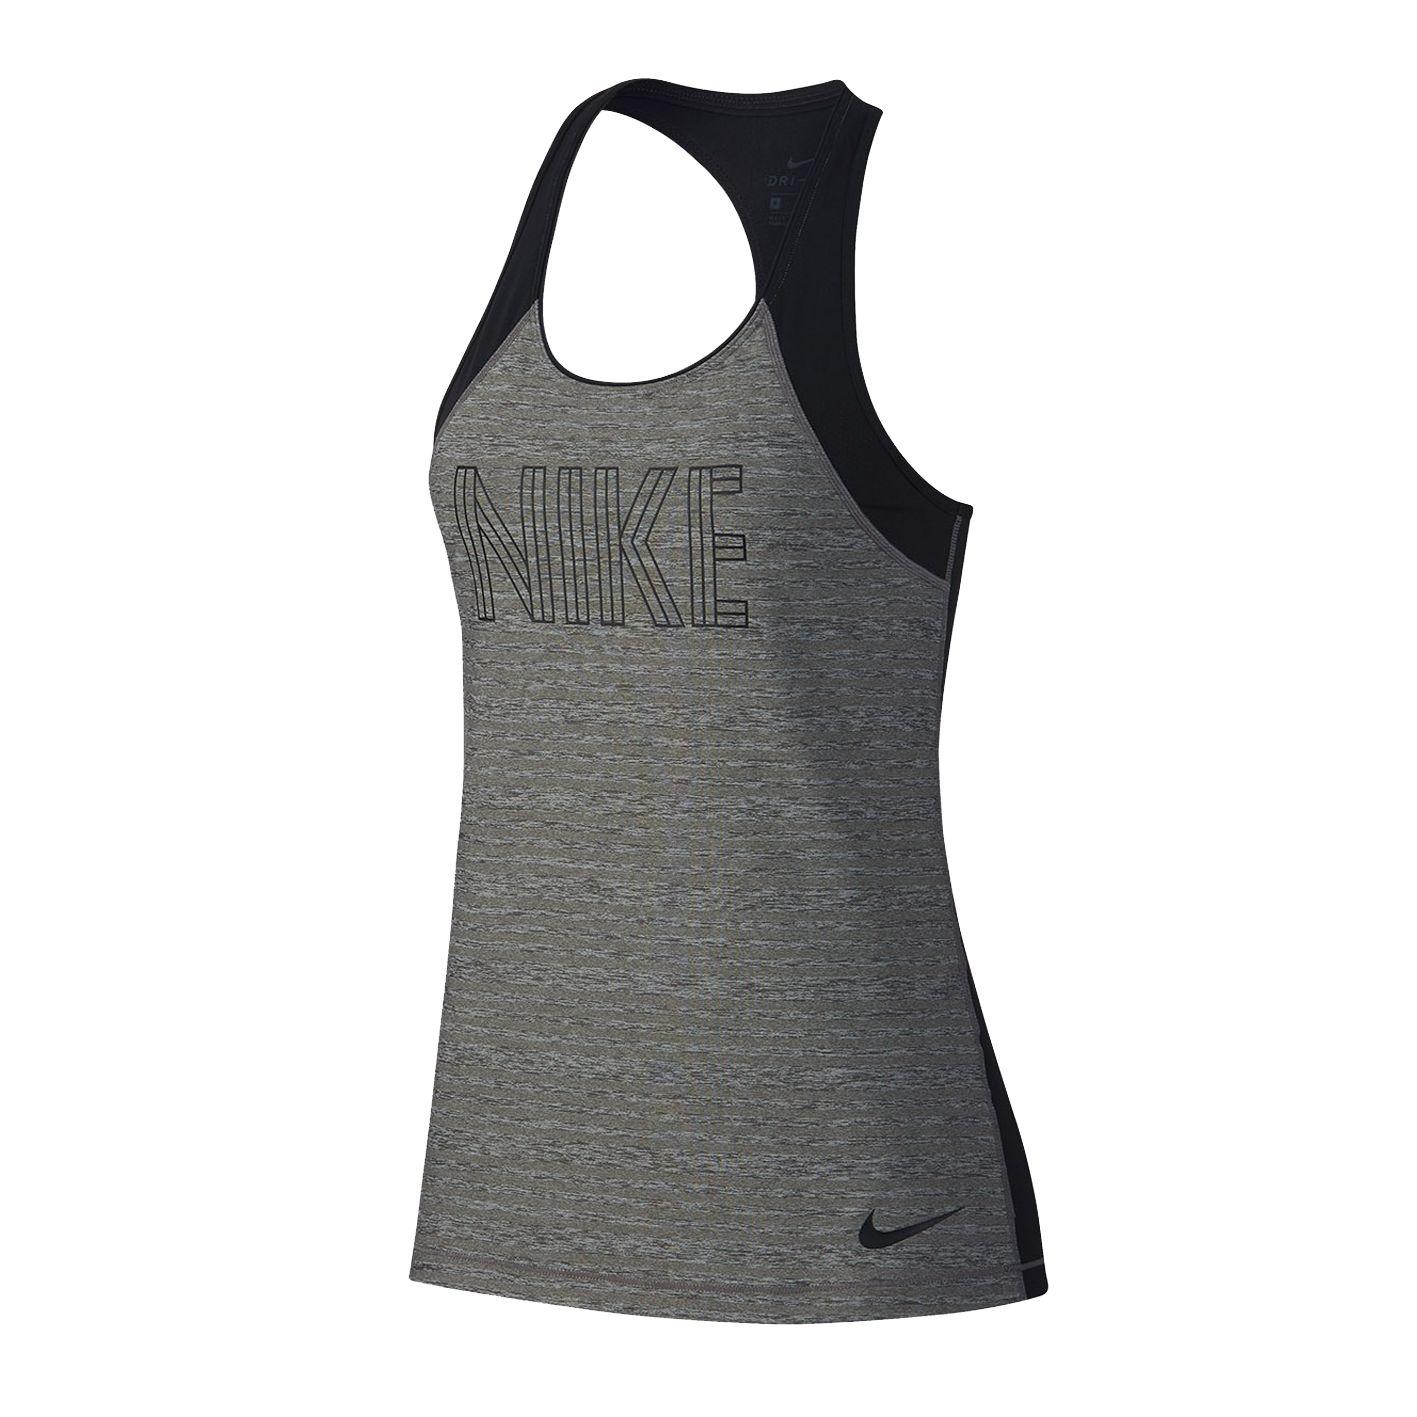 Carbon Nike Logo - Nike Women's Logo Training Tank Carbon Heather. Women's T Shirts